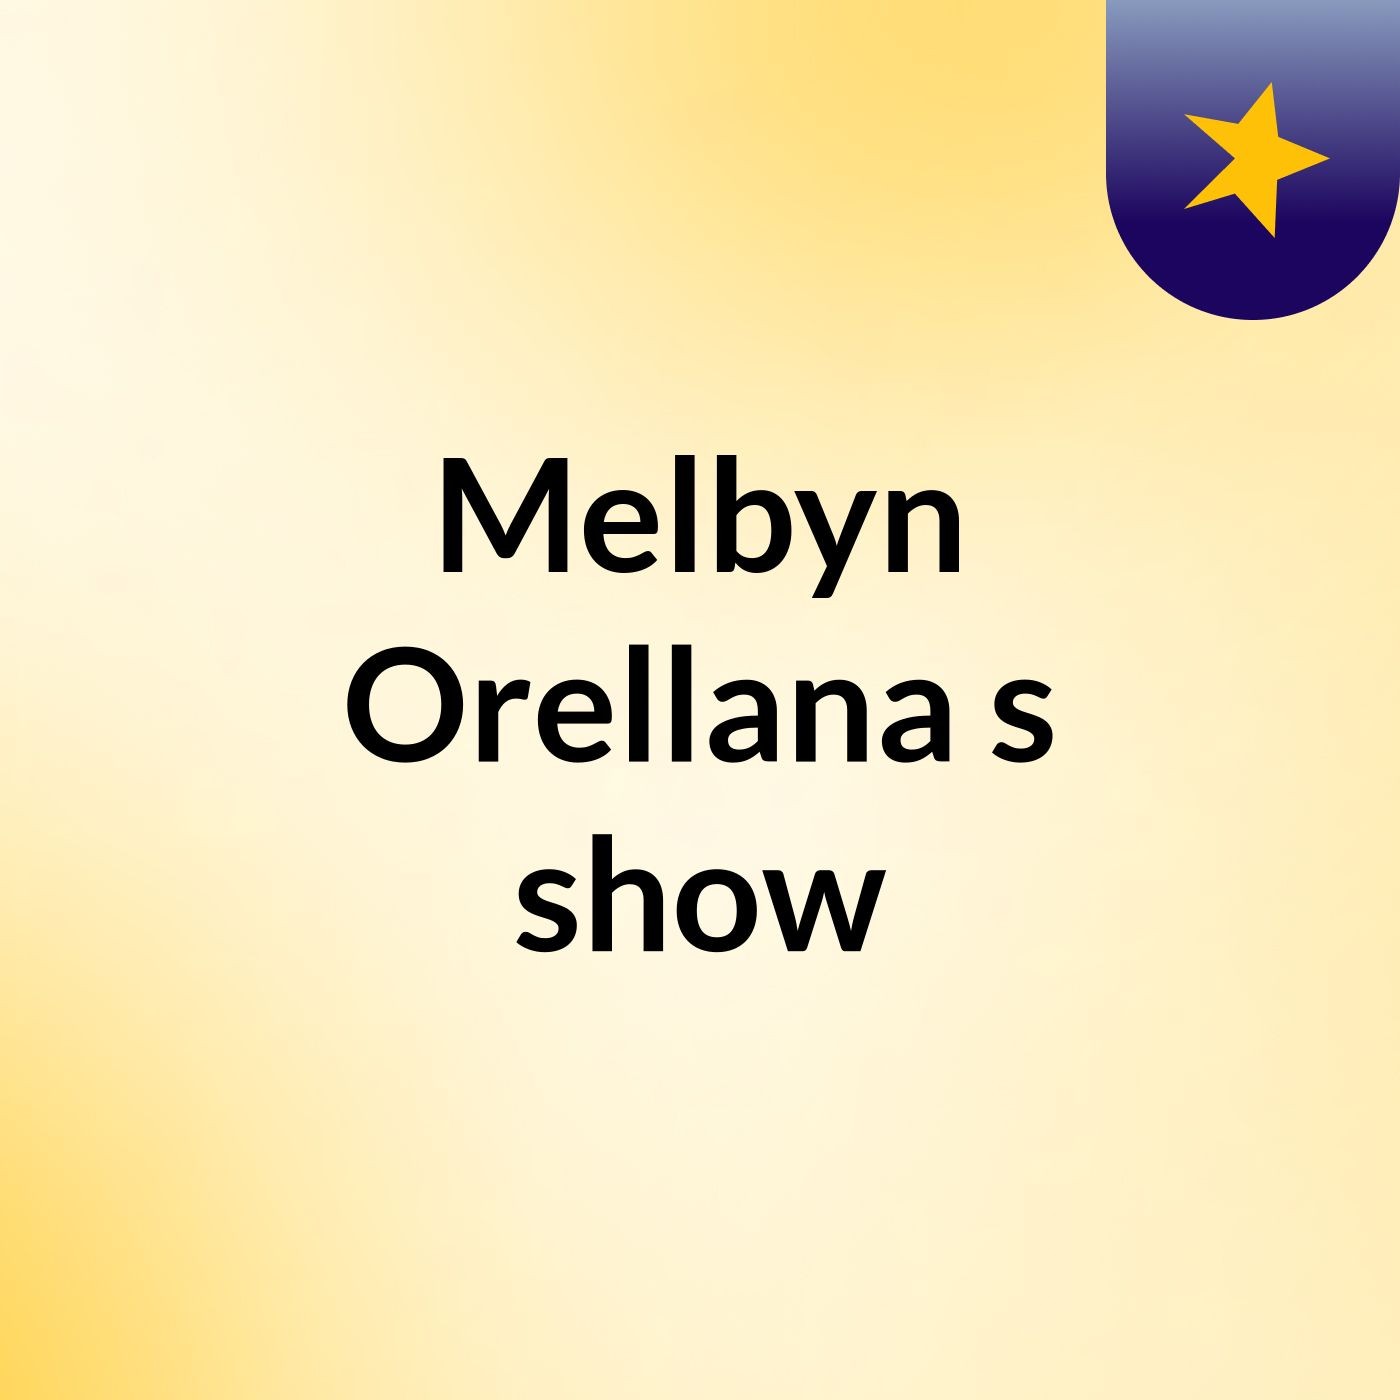 Melbyn Orellana's show